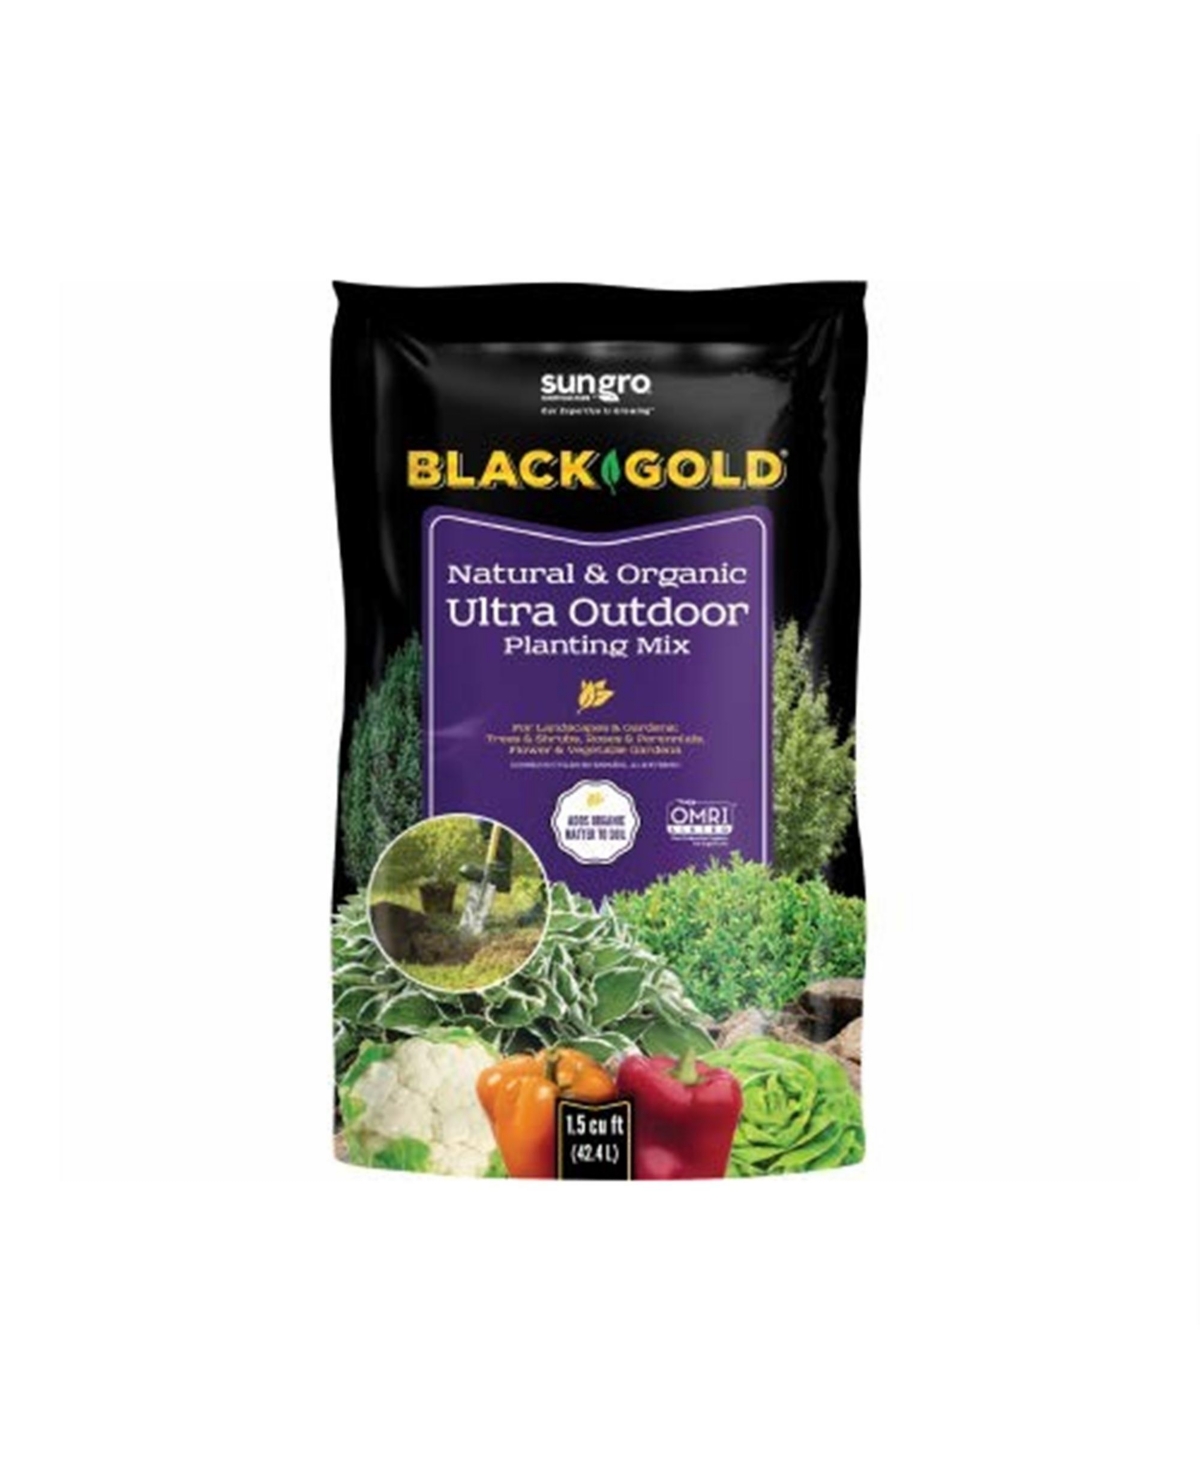 Black Gold Natural & Organic Ultra Outdoor Planting Mix, 1.5 Cf